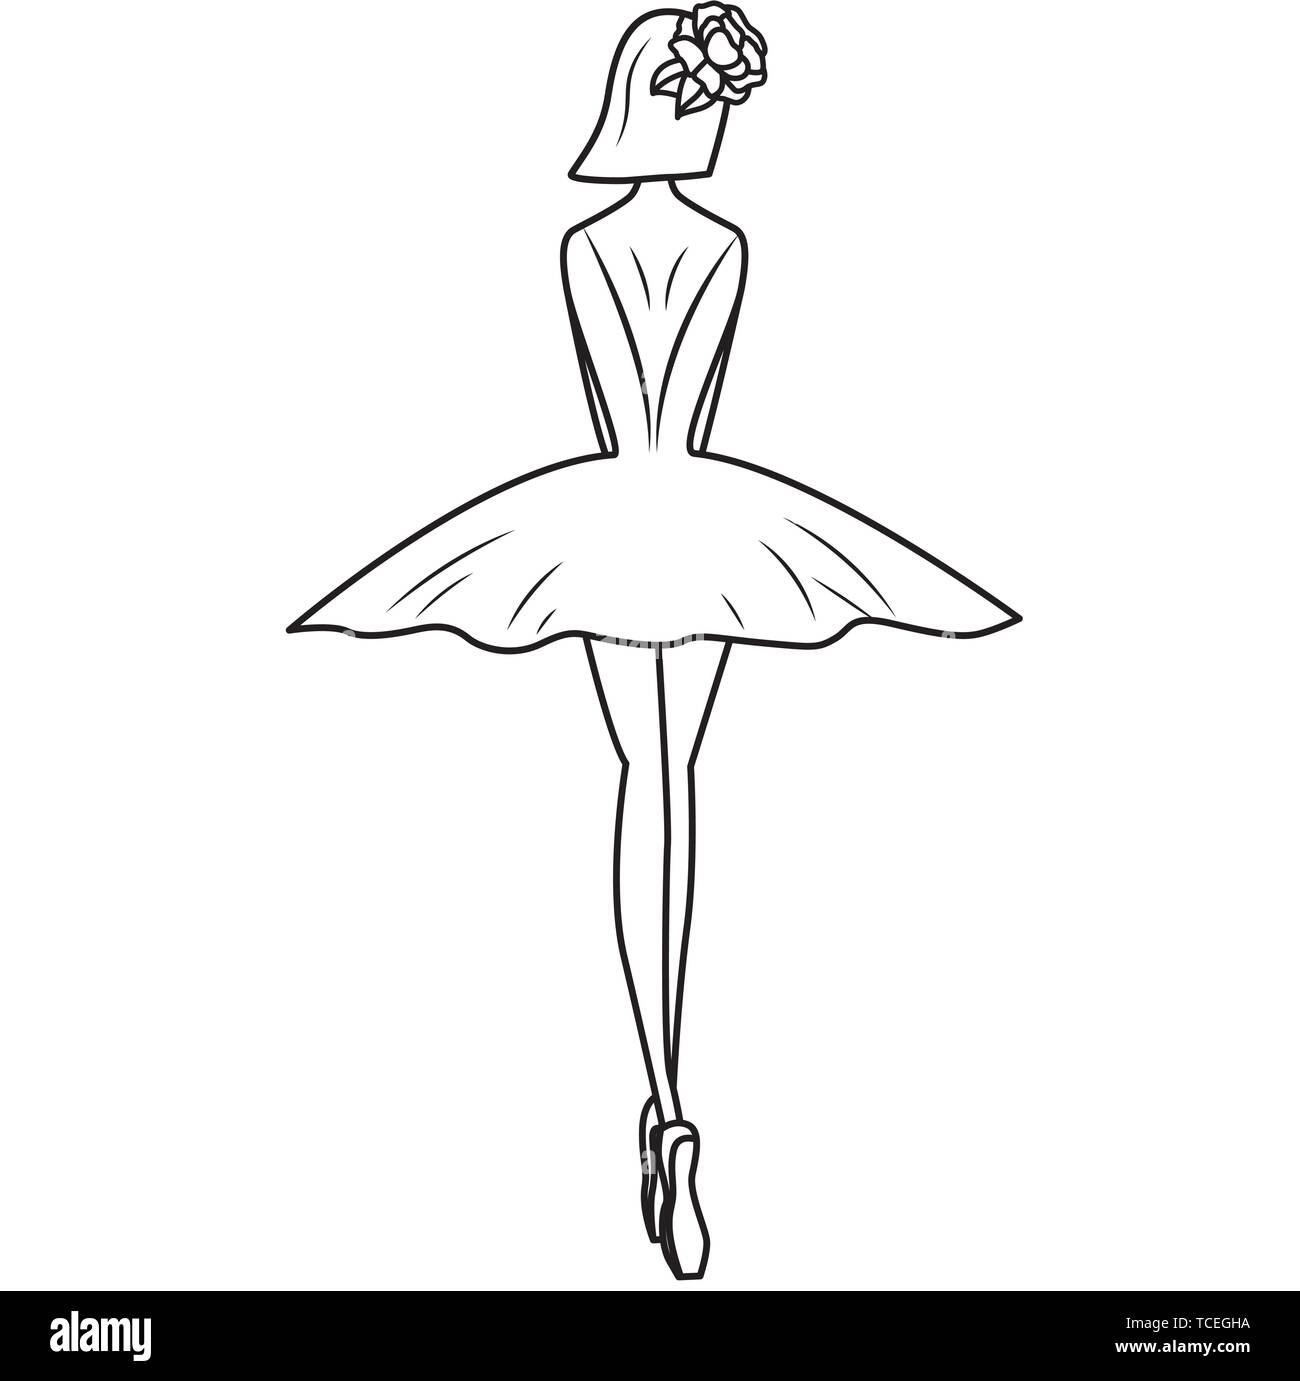 Featured image of post Bailarina Silueta Blanca Bailarina de ballet princesa silueta de bailarina bailarina aislada bailarina vectorial